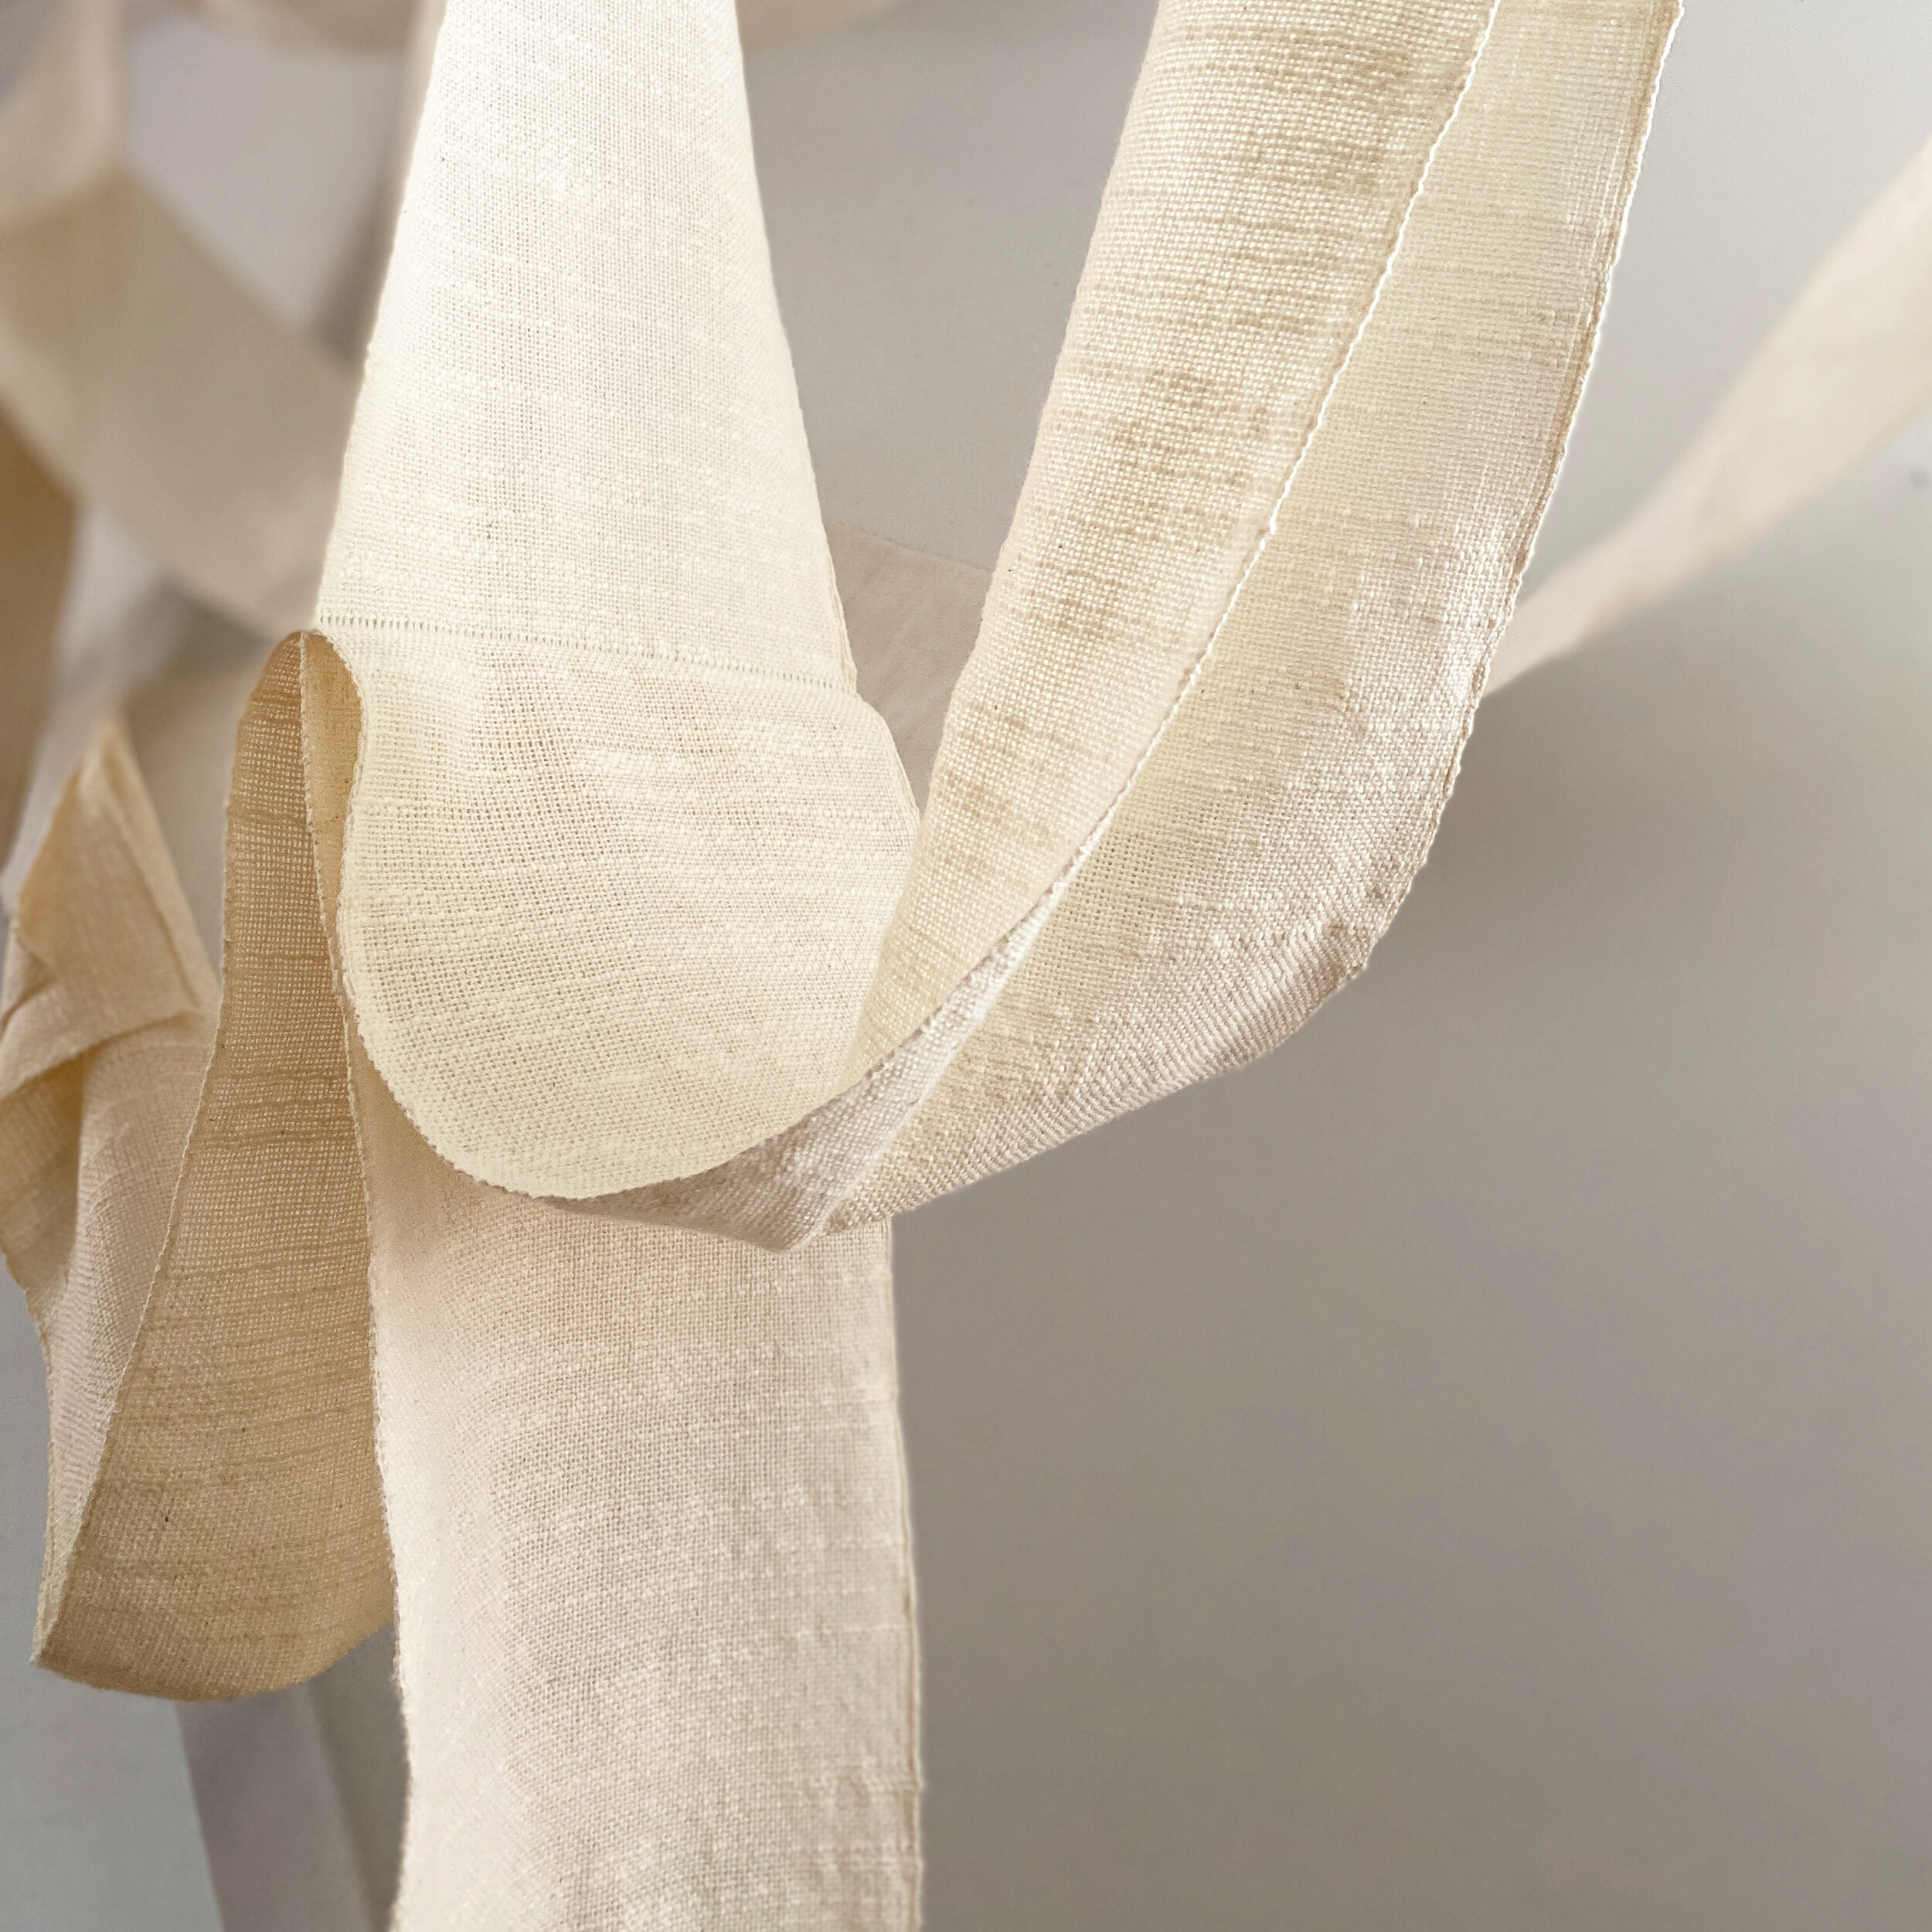  Robustness to Uncertainty detail | cotton, linen, silk | 2020 | Alternator Centre for Contemporary Art 